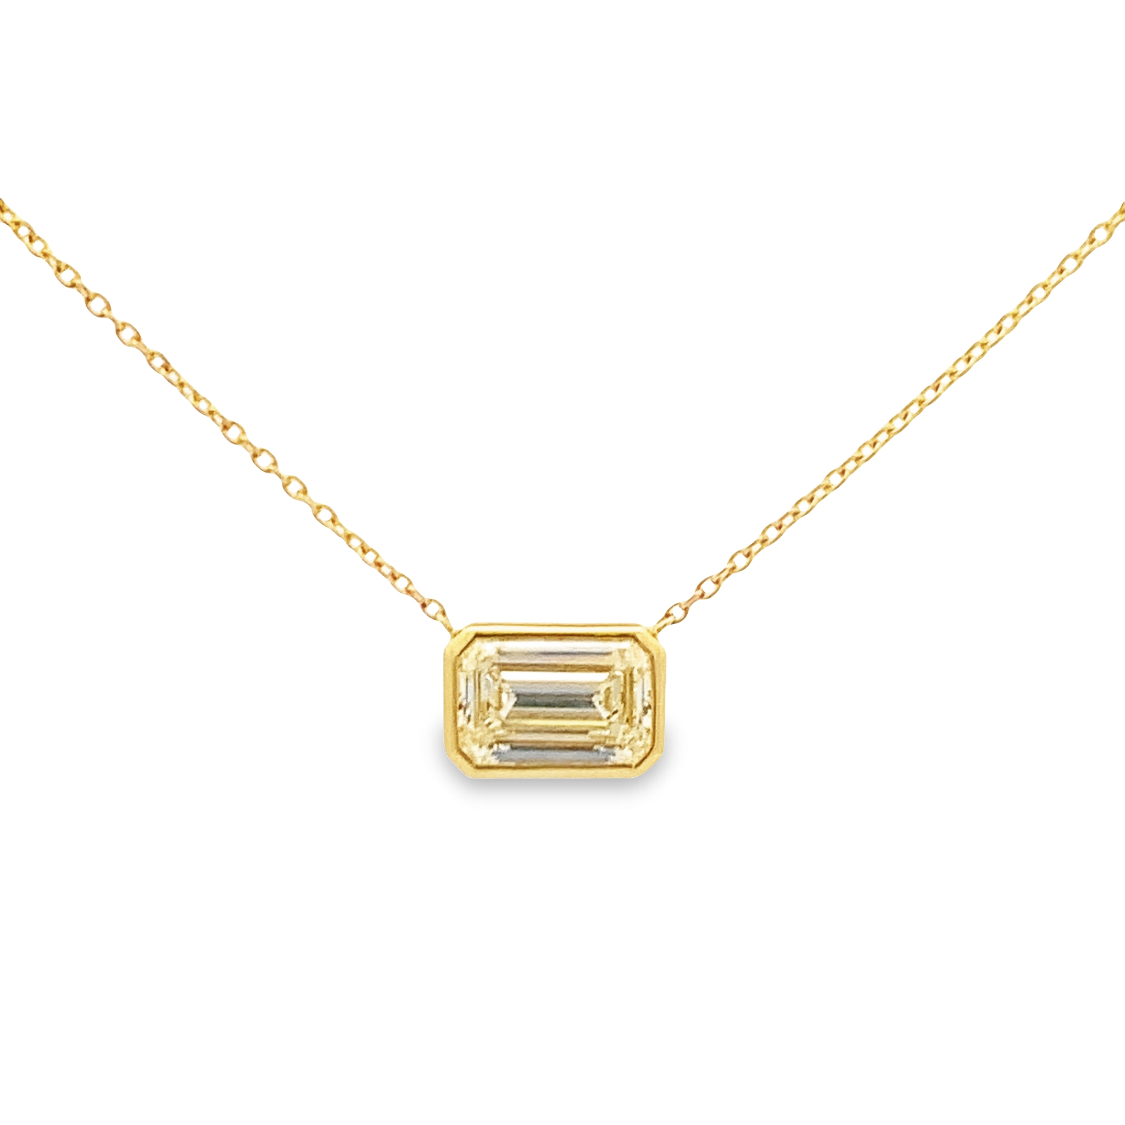 Norman Silverman 18K Yellow Gold Emerald Cut Diamond Pendant Necklace